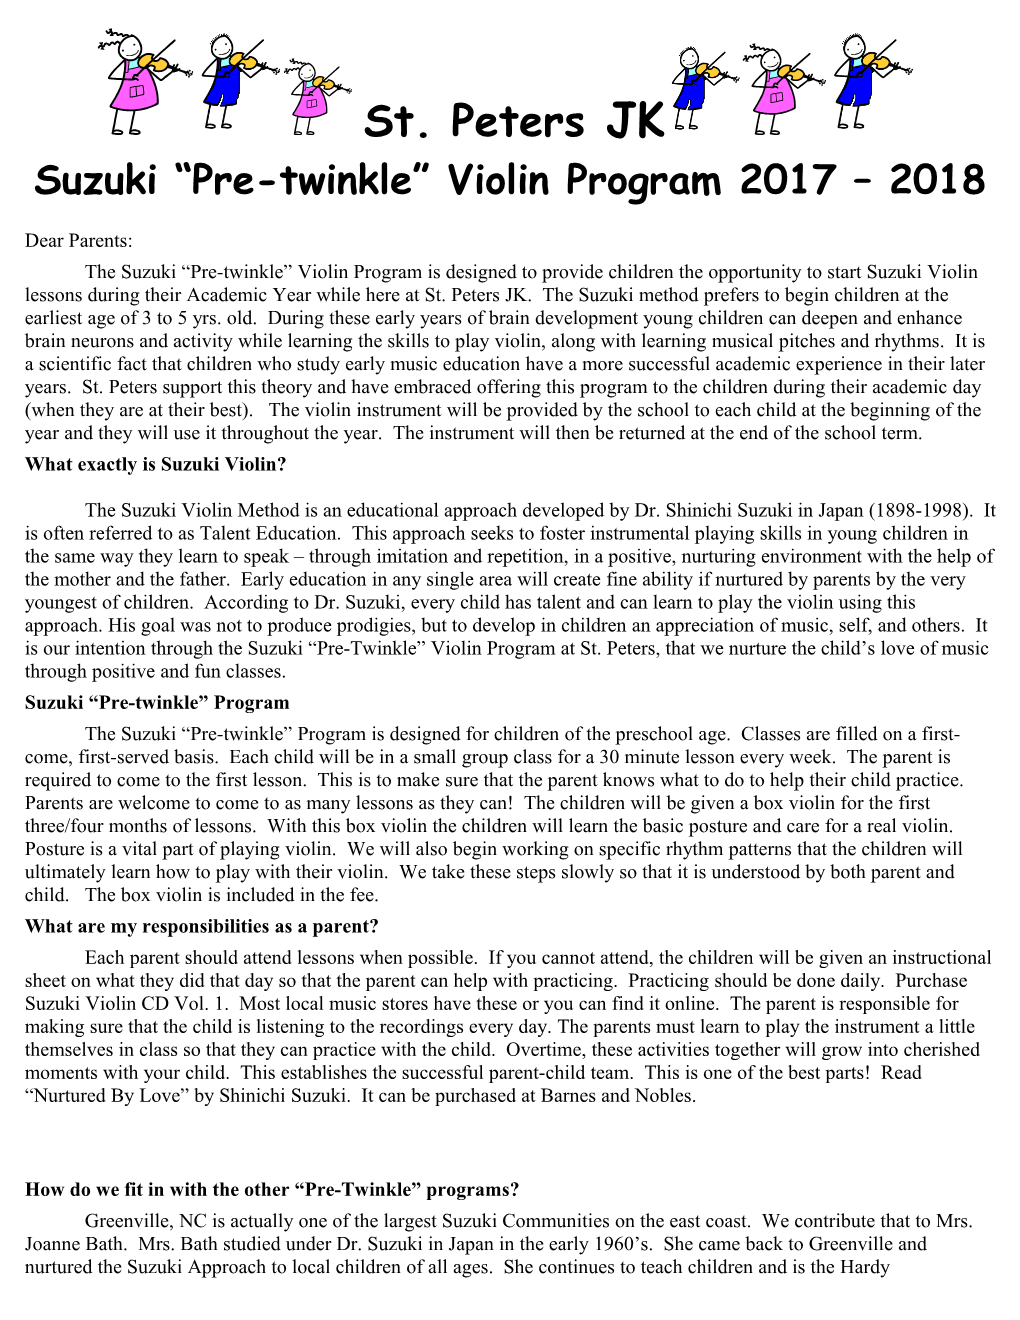 Suzuki Pre-Twinkle Violin Program 2017 2018